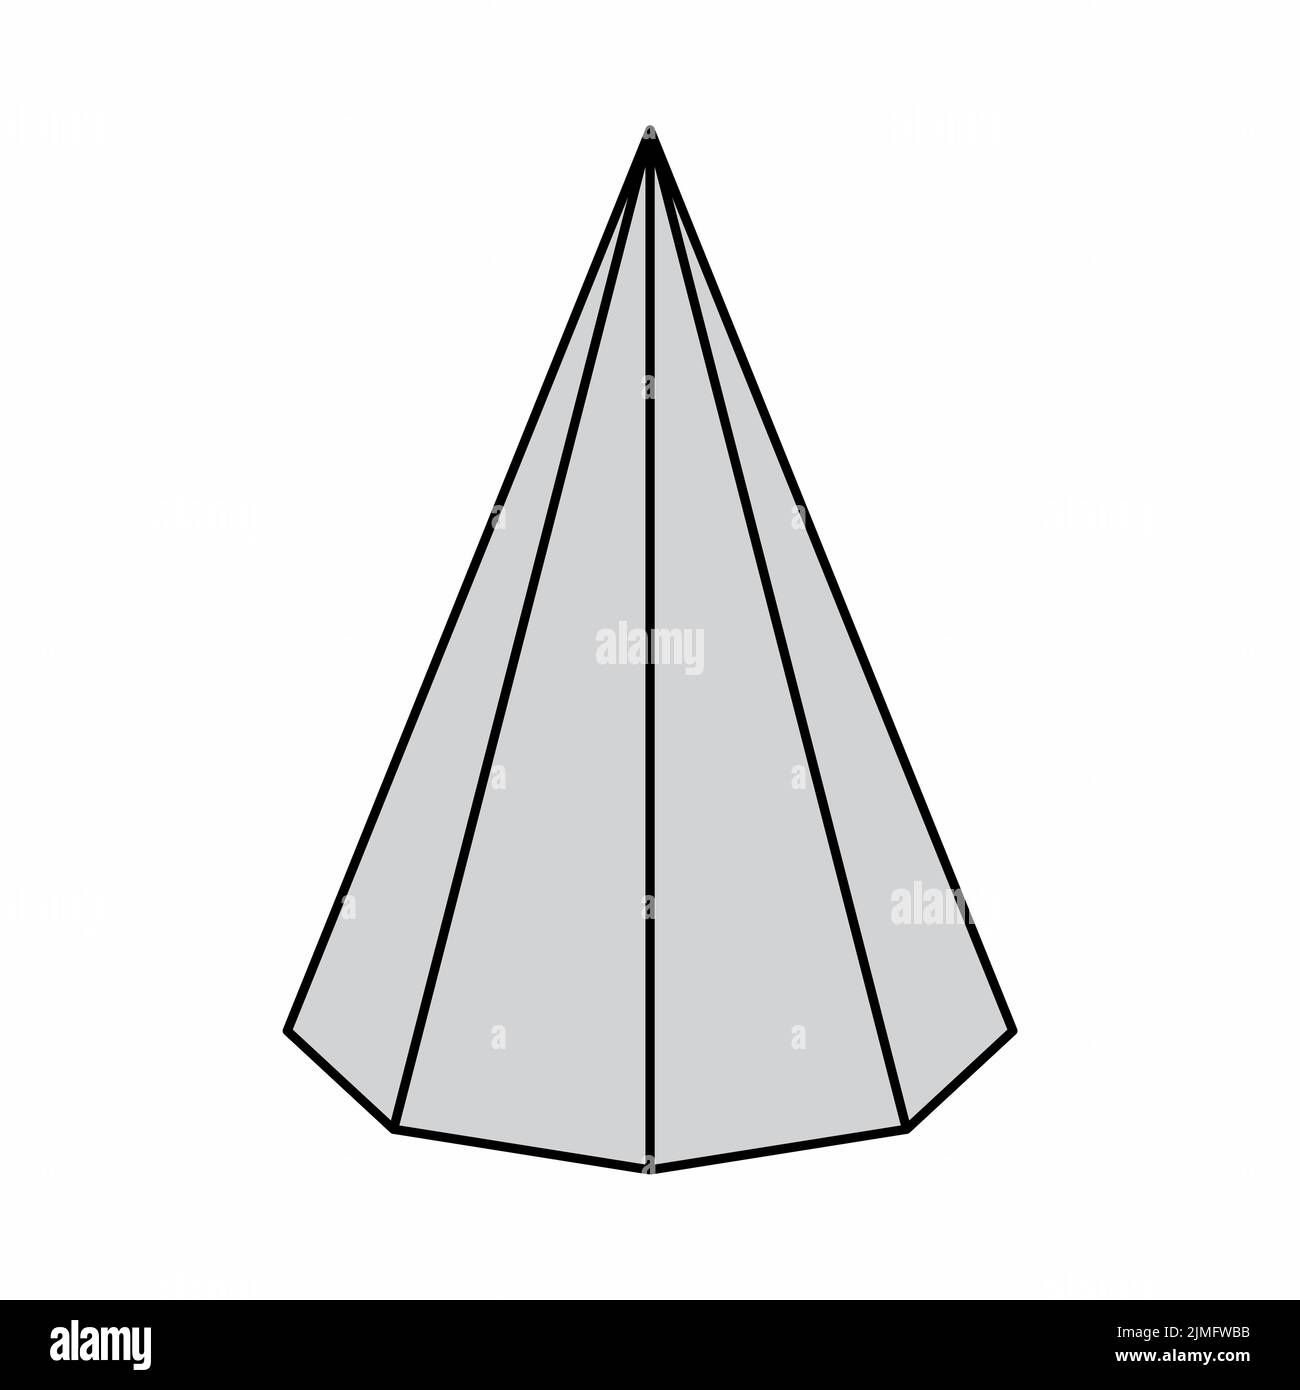 Piramide octagonal Imágenes vectoriales de stock - Alamy